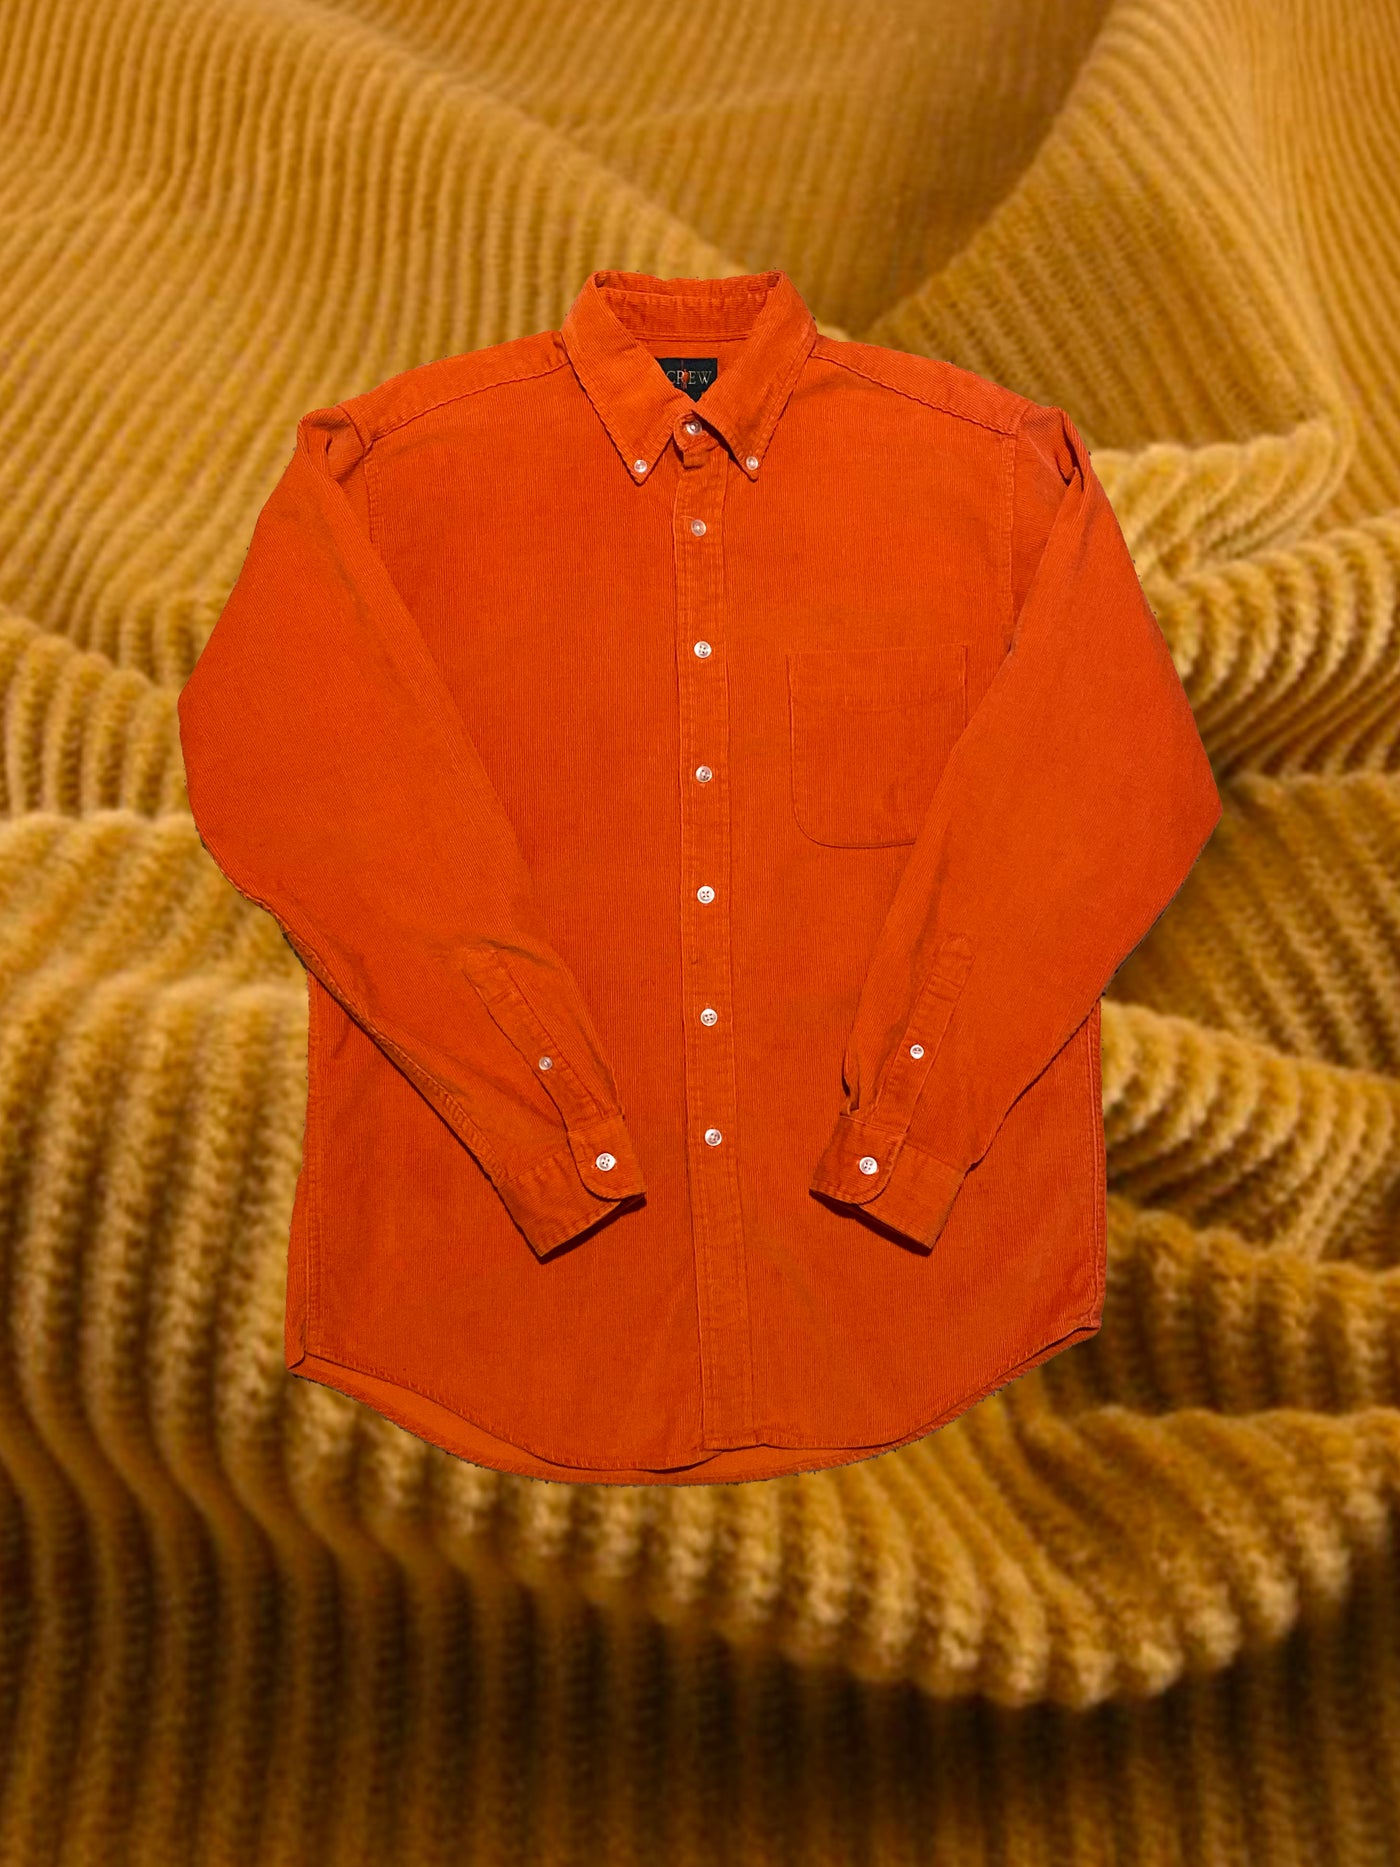 Vintage Pumpkin J. Crew Corduroy Shirt